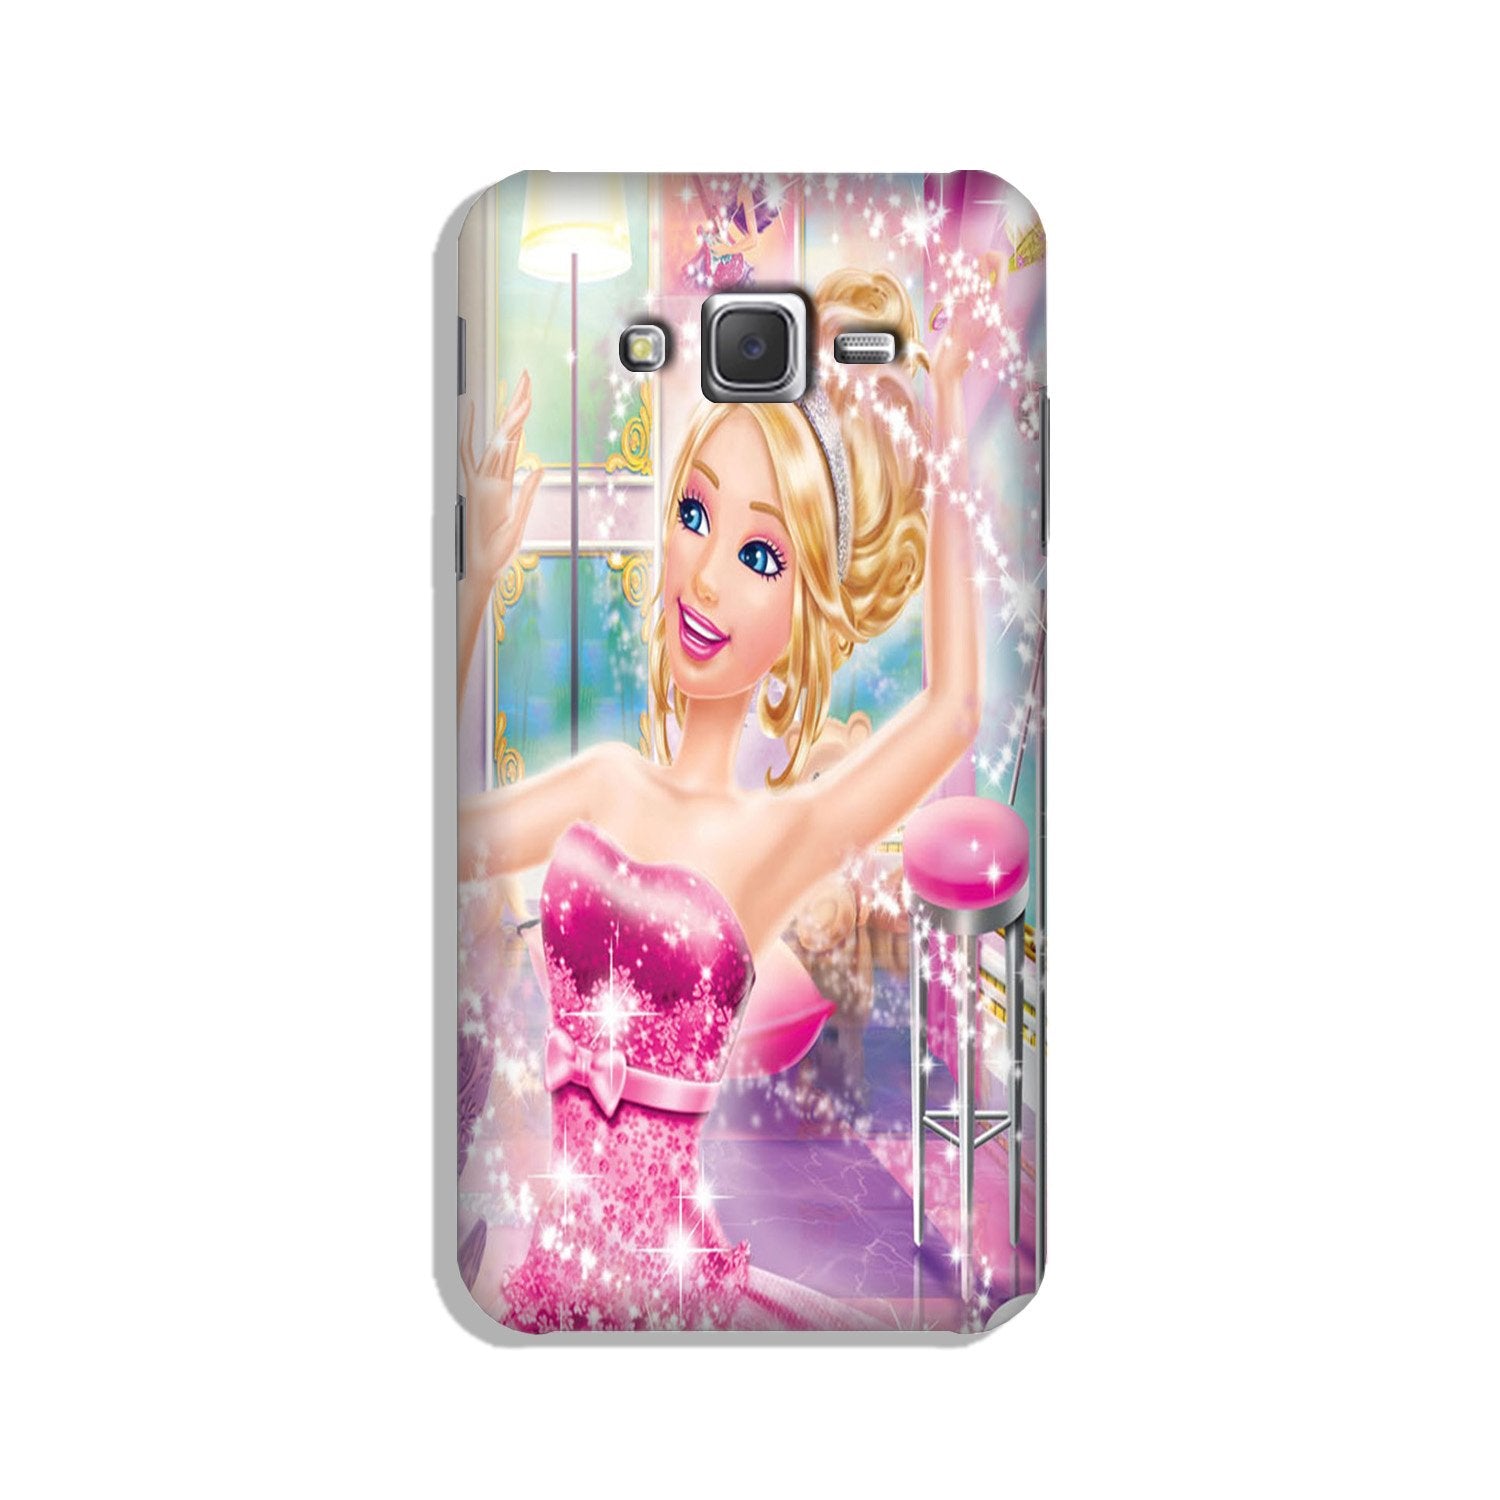 Princesses Case for Galaxy J7 (2015)